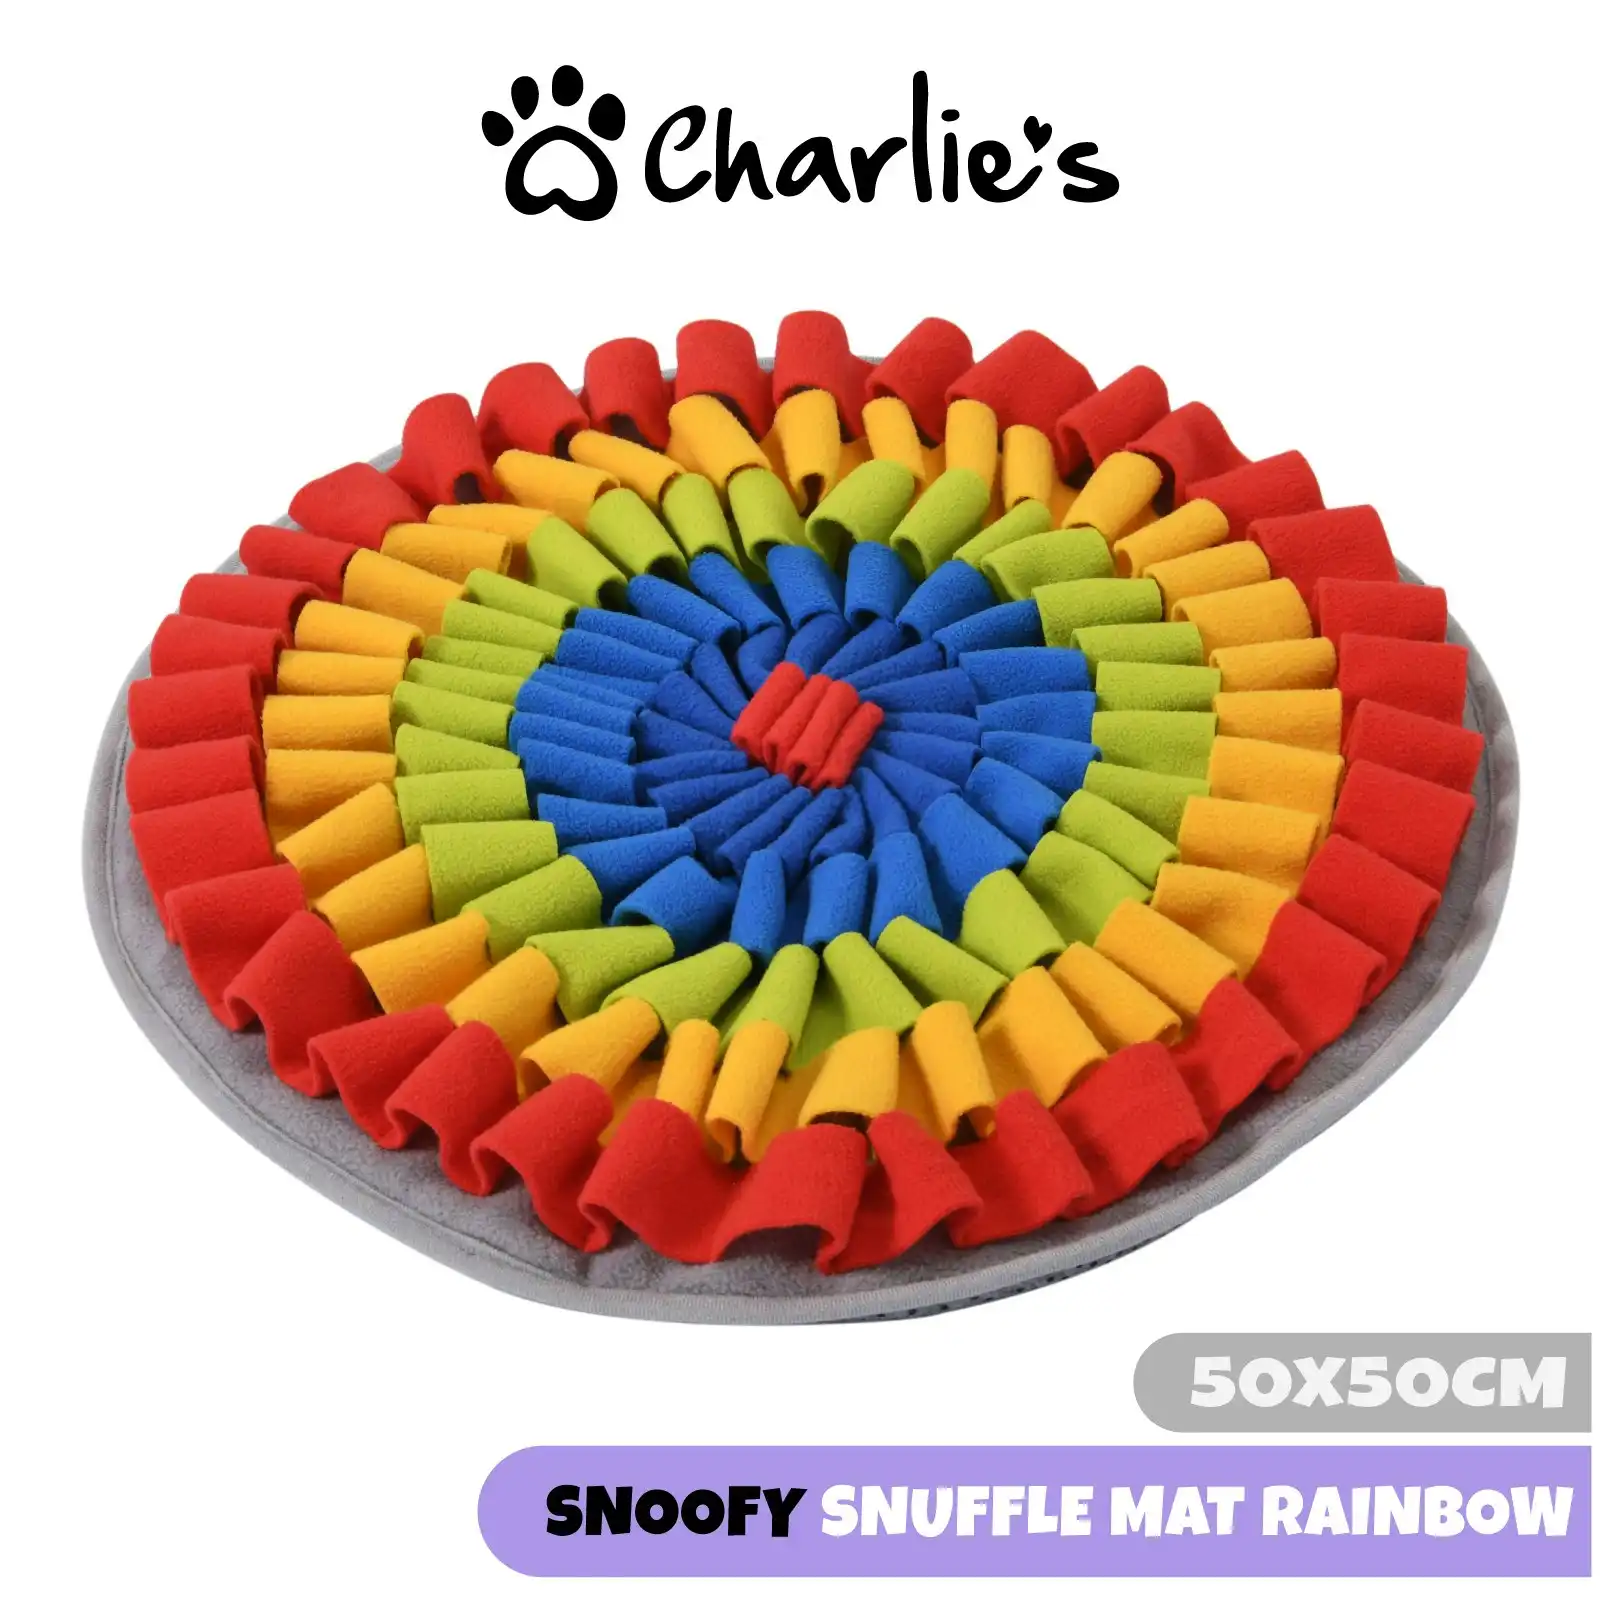 Charlie's Snoofy Snuffle Mat Rainbow 50x50cm